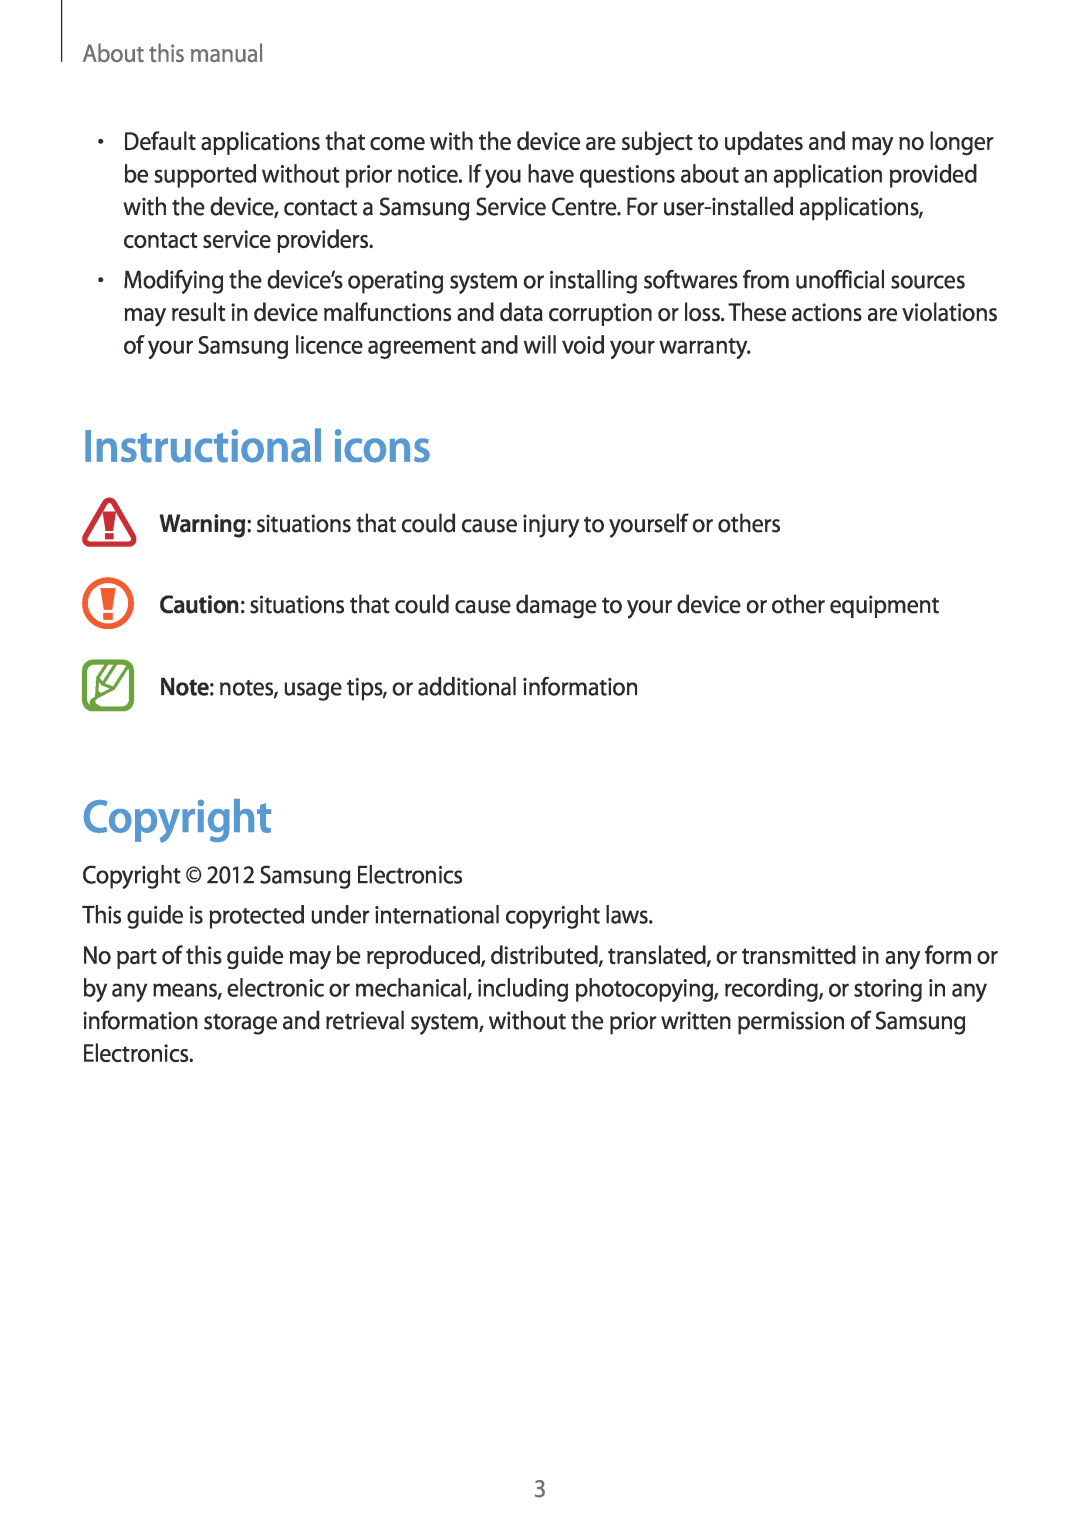 Samsung GT-I8190TANIDE, GT-I8190RWNDTM, GT-I8190RWNDBT, GT-I8190MBNTPL Instructional icons, Copyright, About this manual 